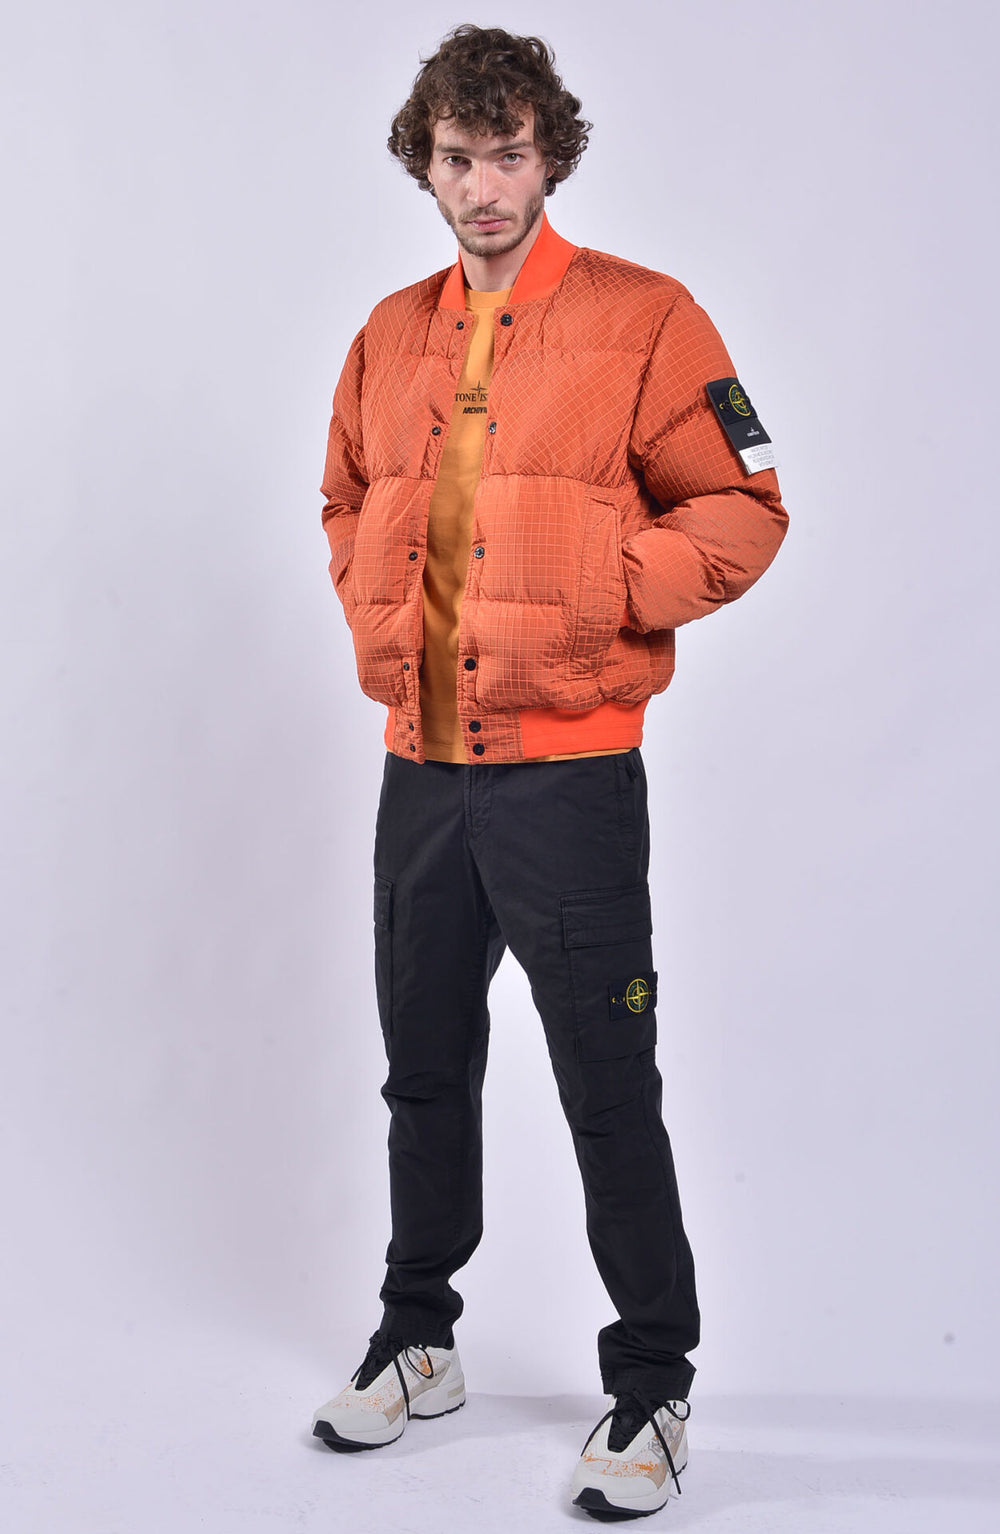 Stone Island Men's Iridescent Jacket in Orange